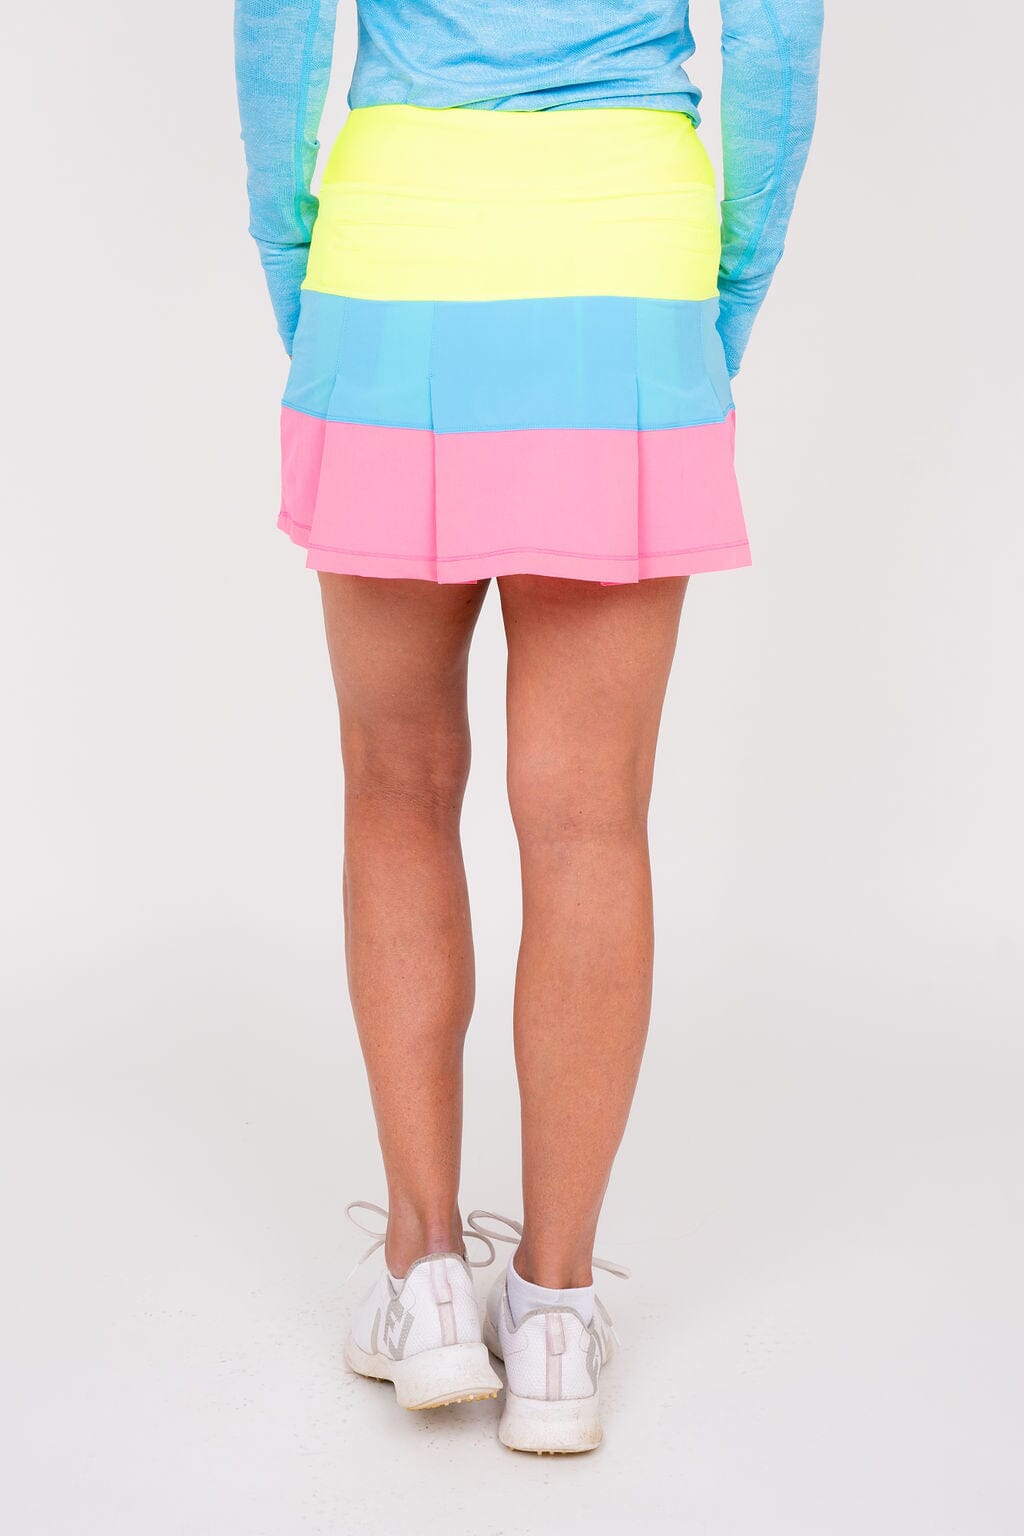 TJ Tour Neon Skirt - Tri Color Short Women's Skirts Taylor Jordan Apparel 